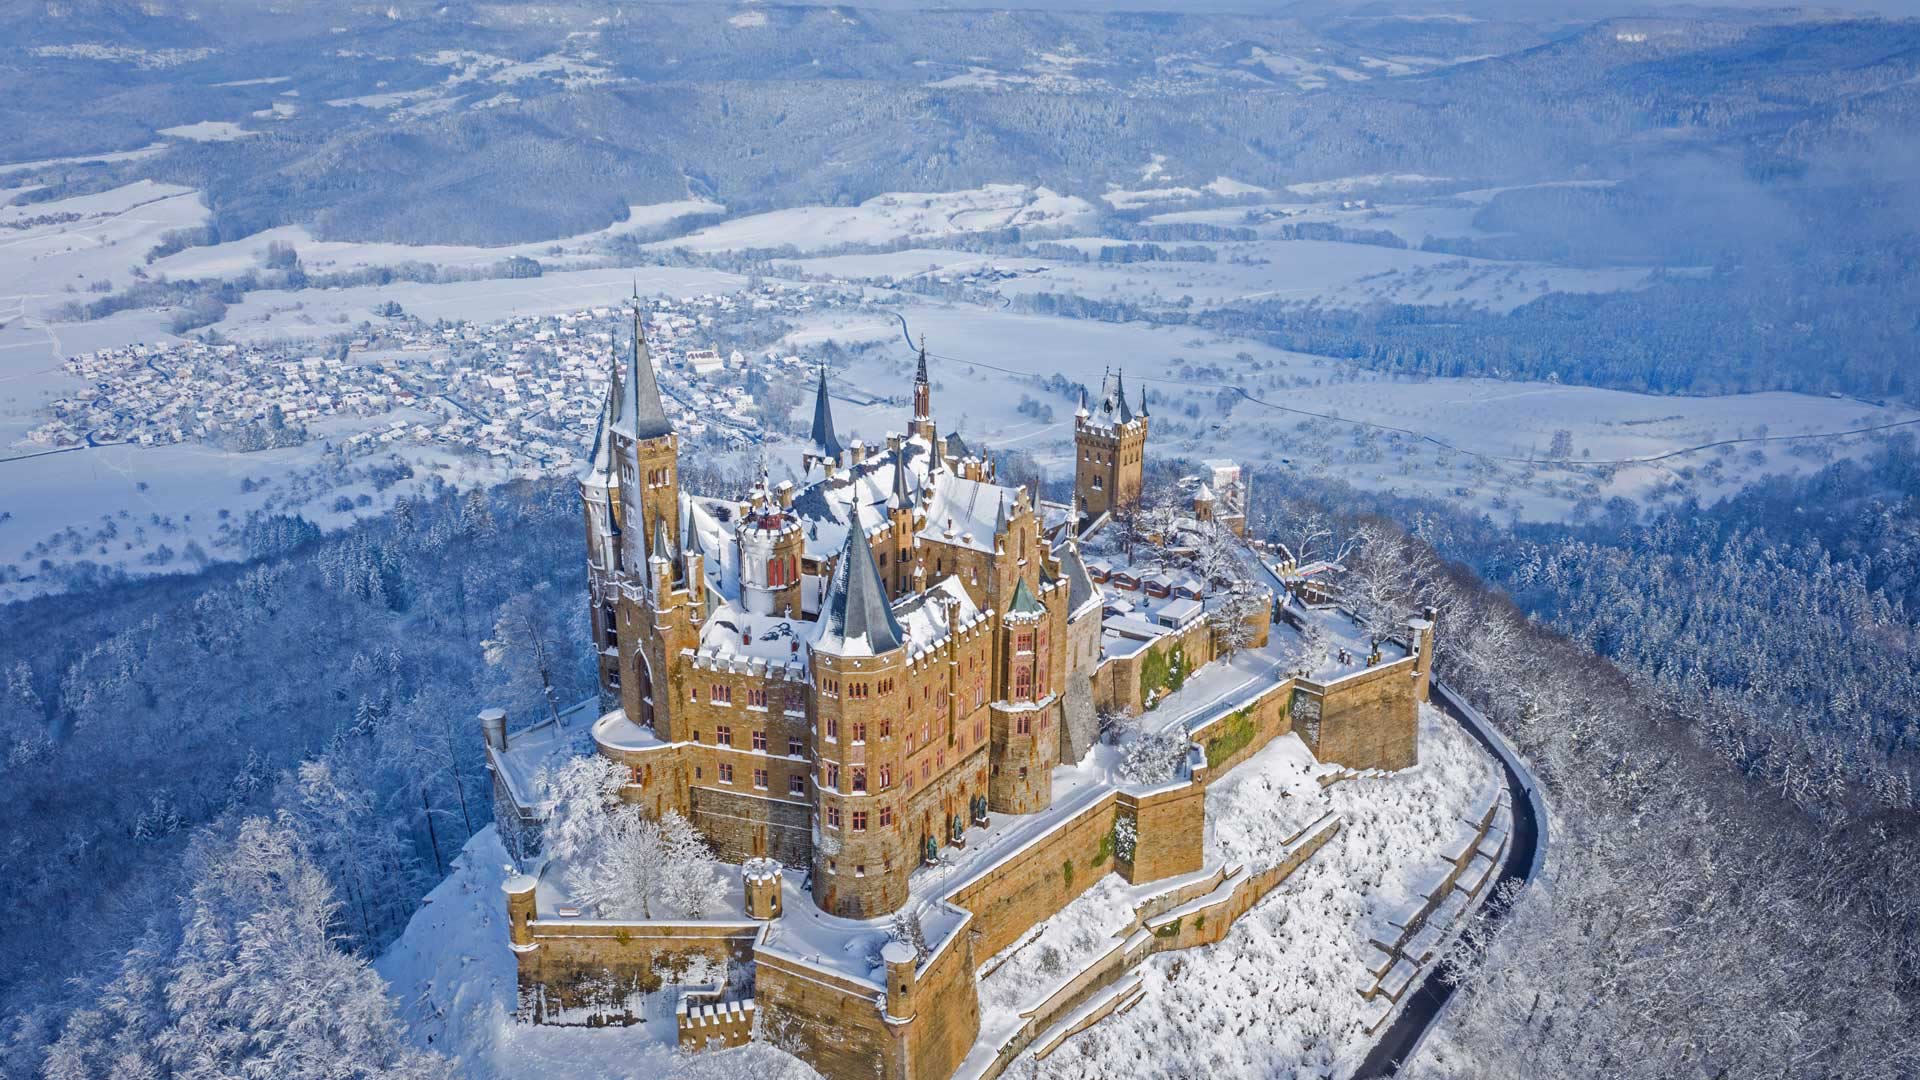 Hohenzollern Castle, Germany - Sahara Prince/Shutterstock)